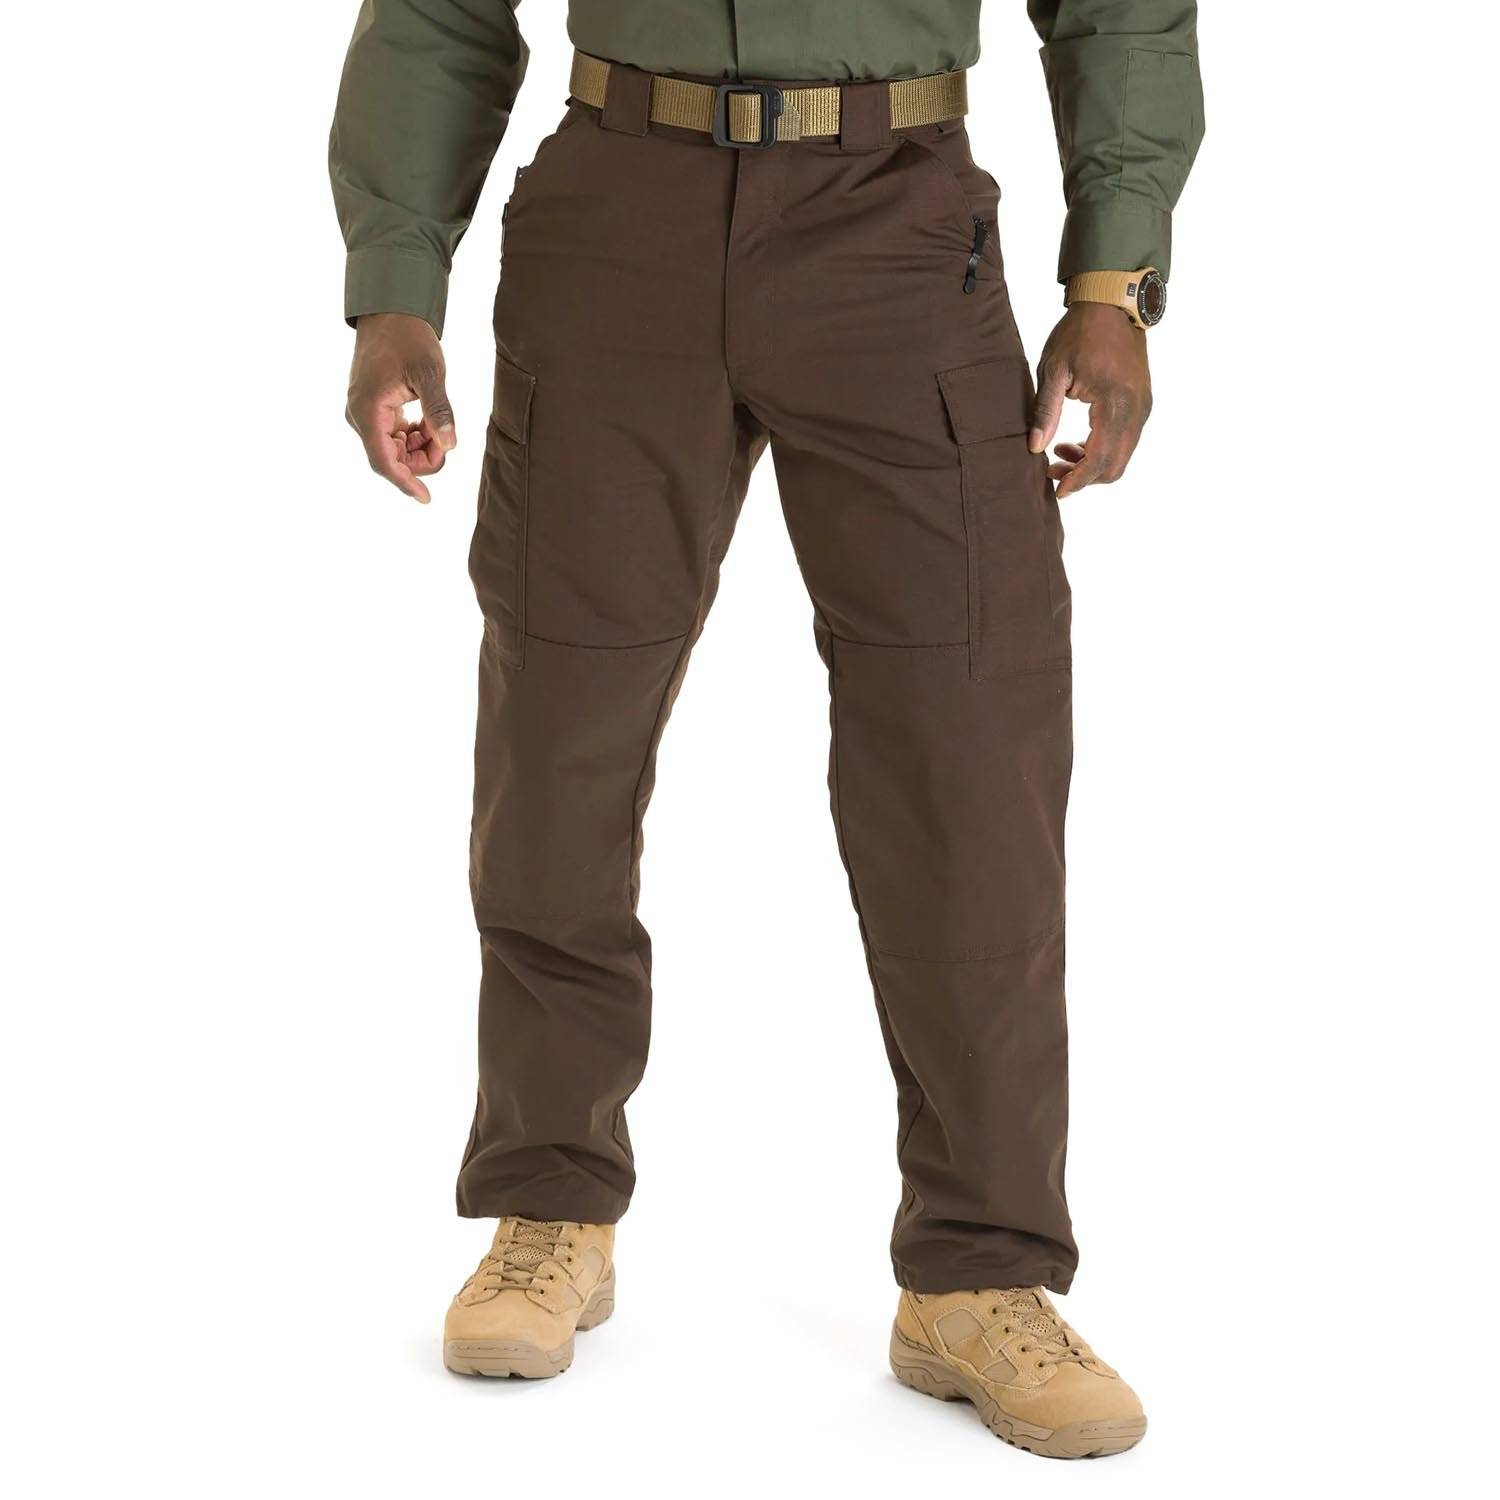 5.11 Tactical Men's Ripstop TDU Pants